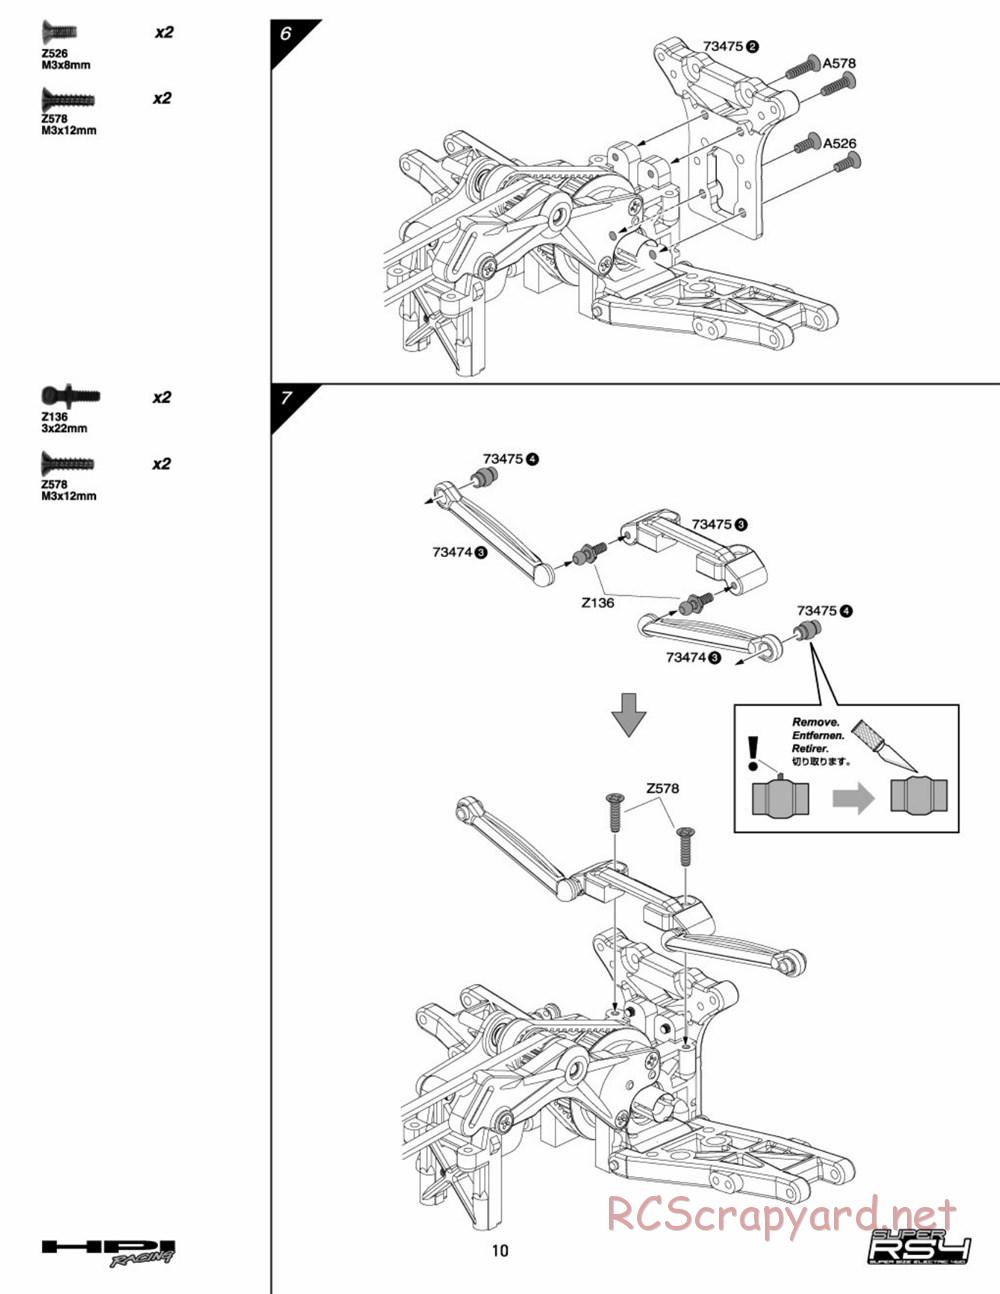 HPI - Super RS4 - Manual - Page 9